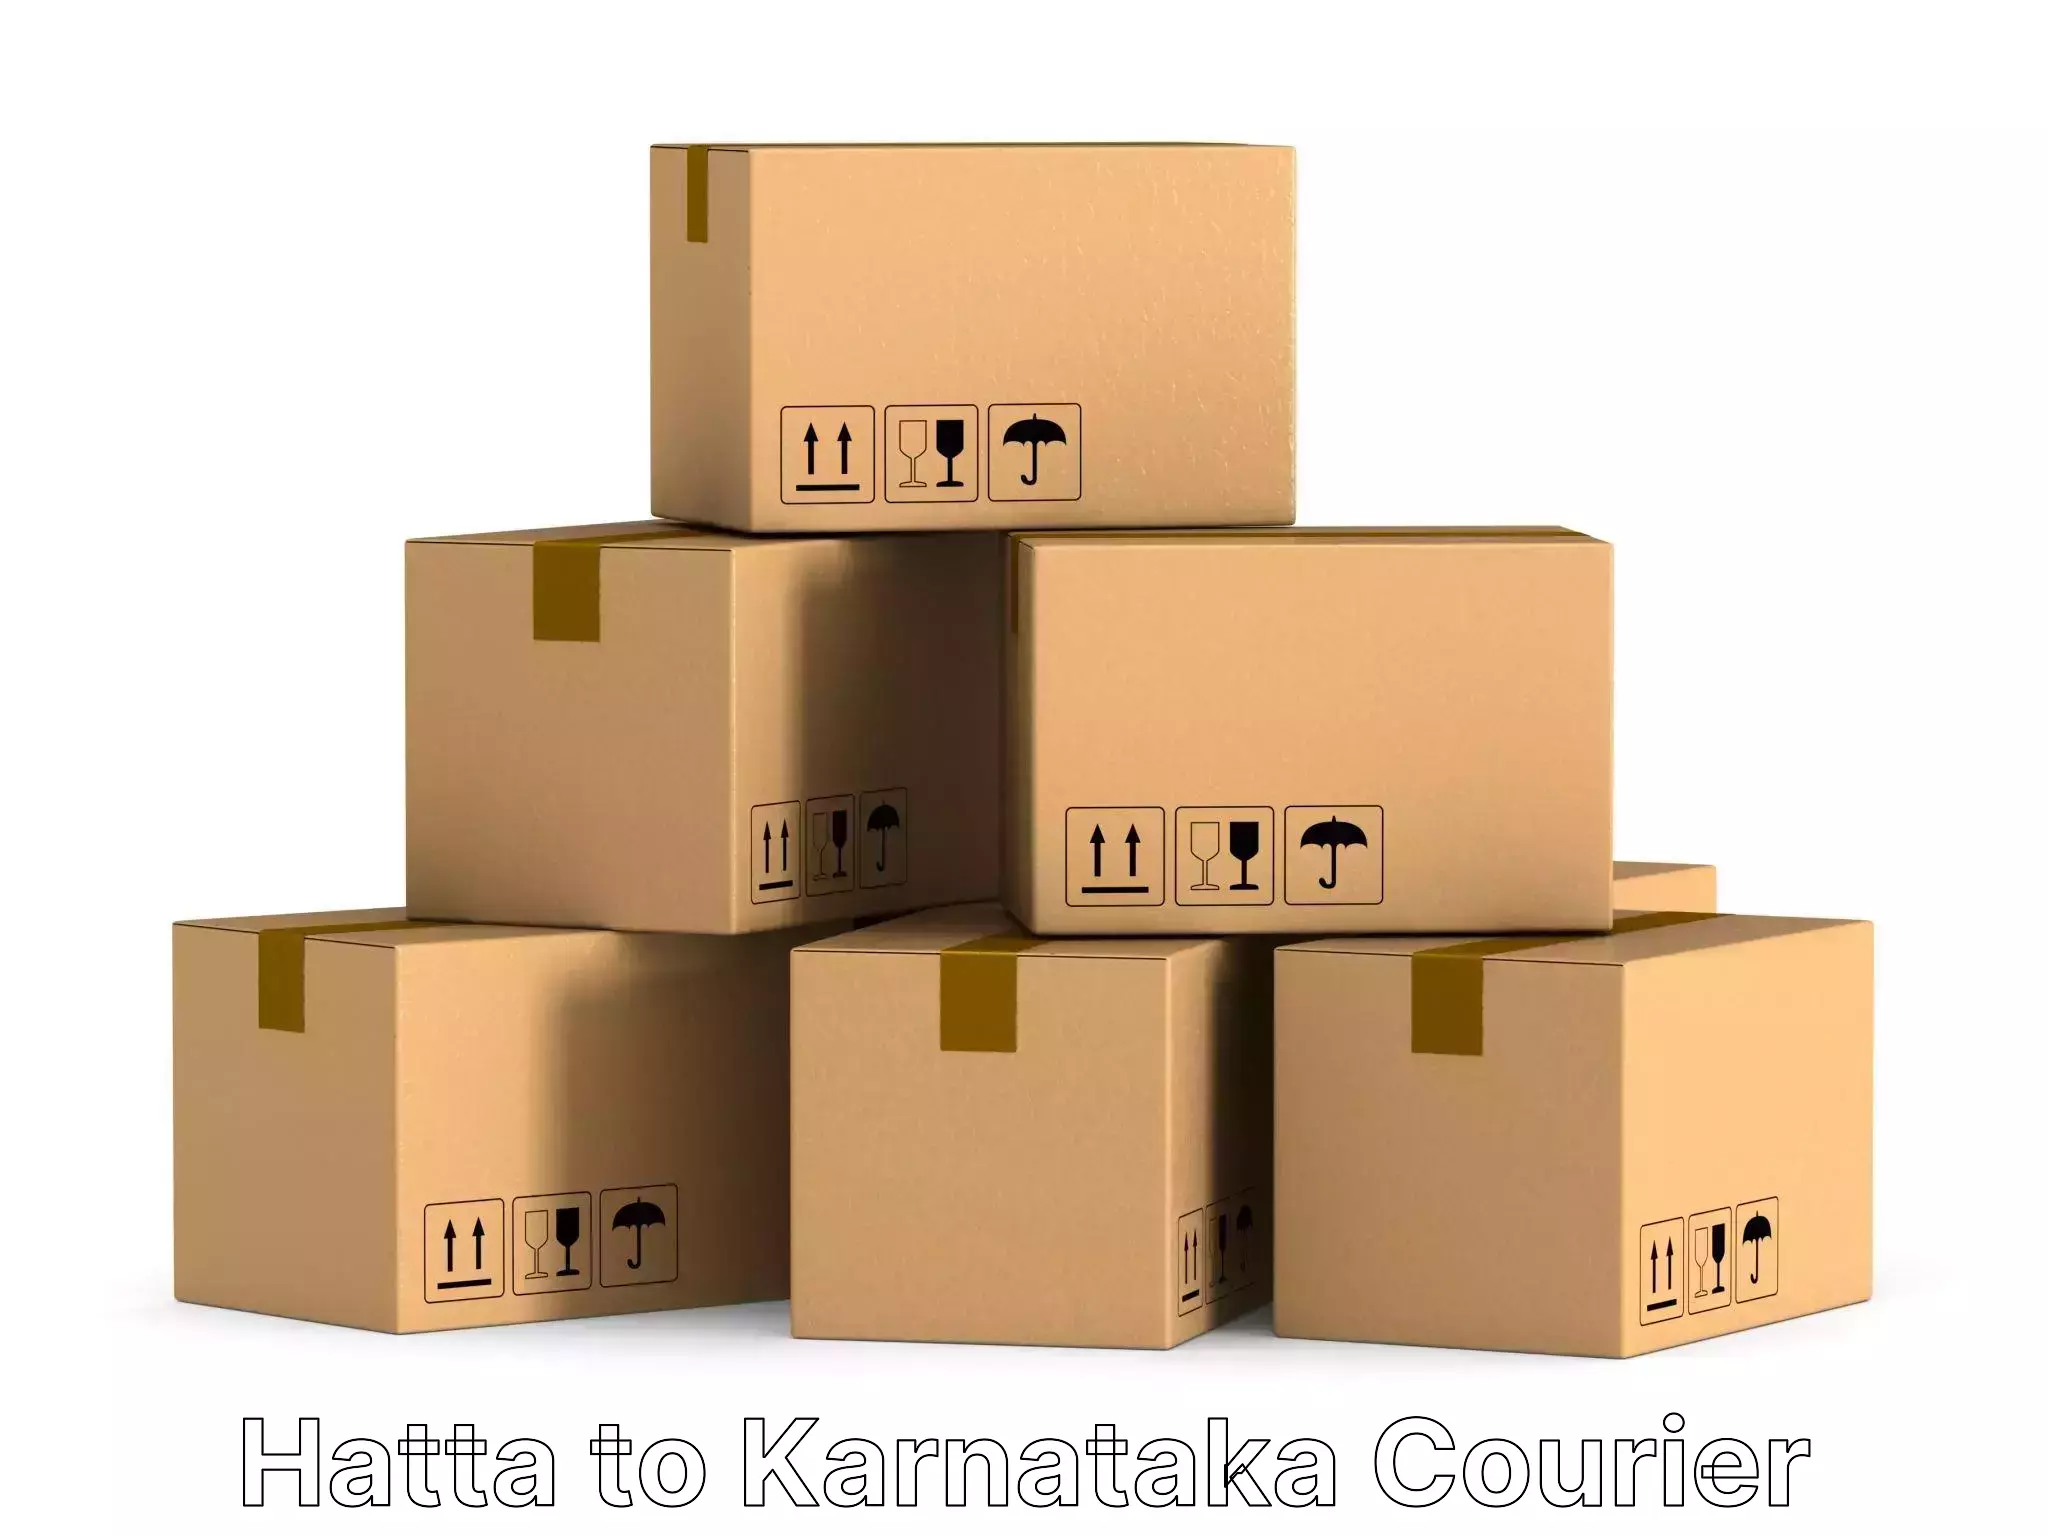 Household transport experts Hatta to Karnataka